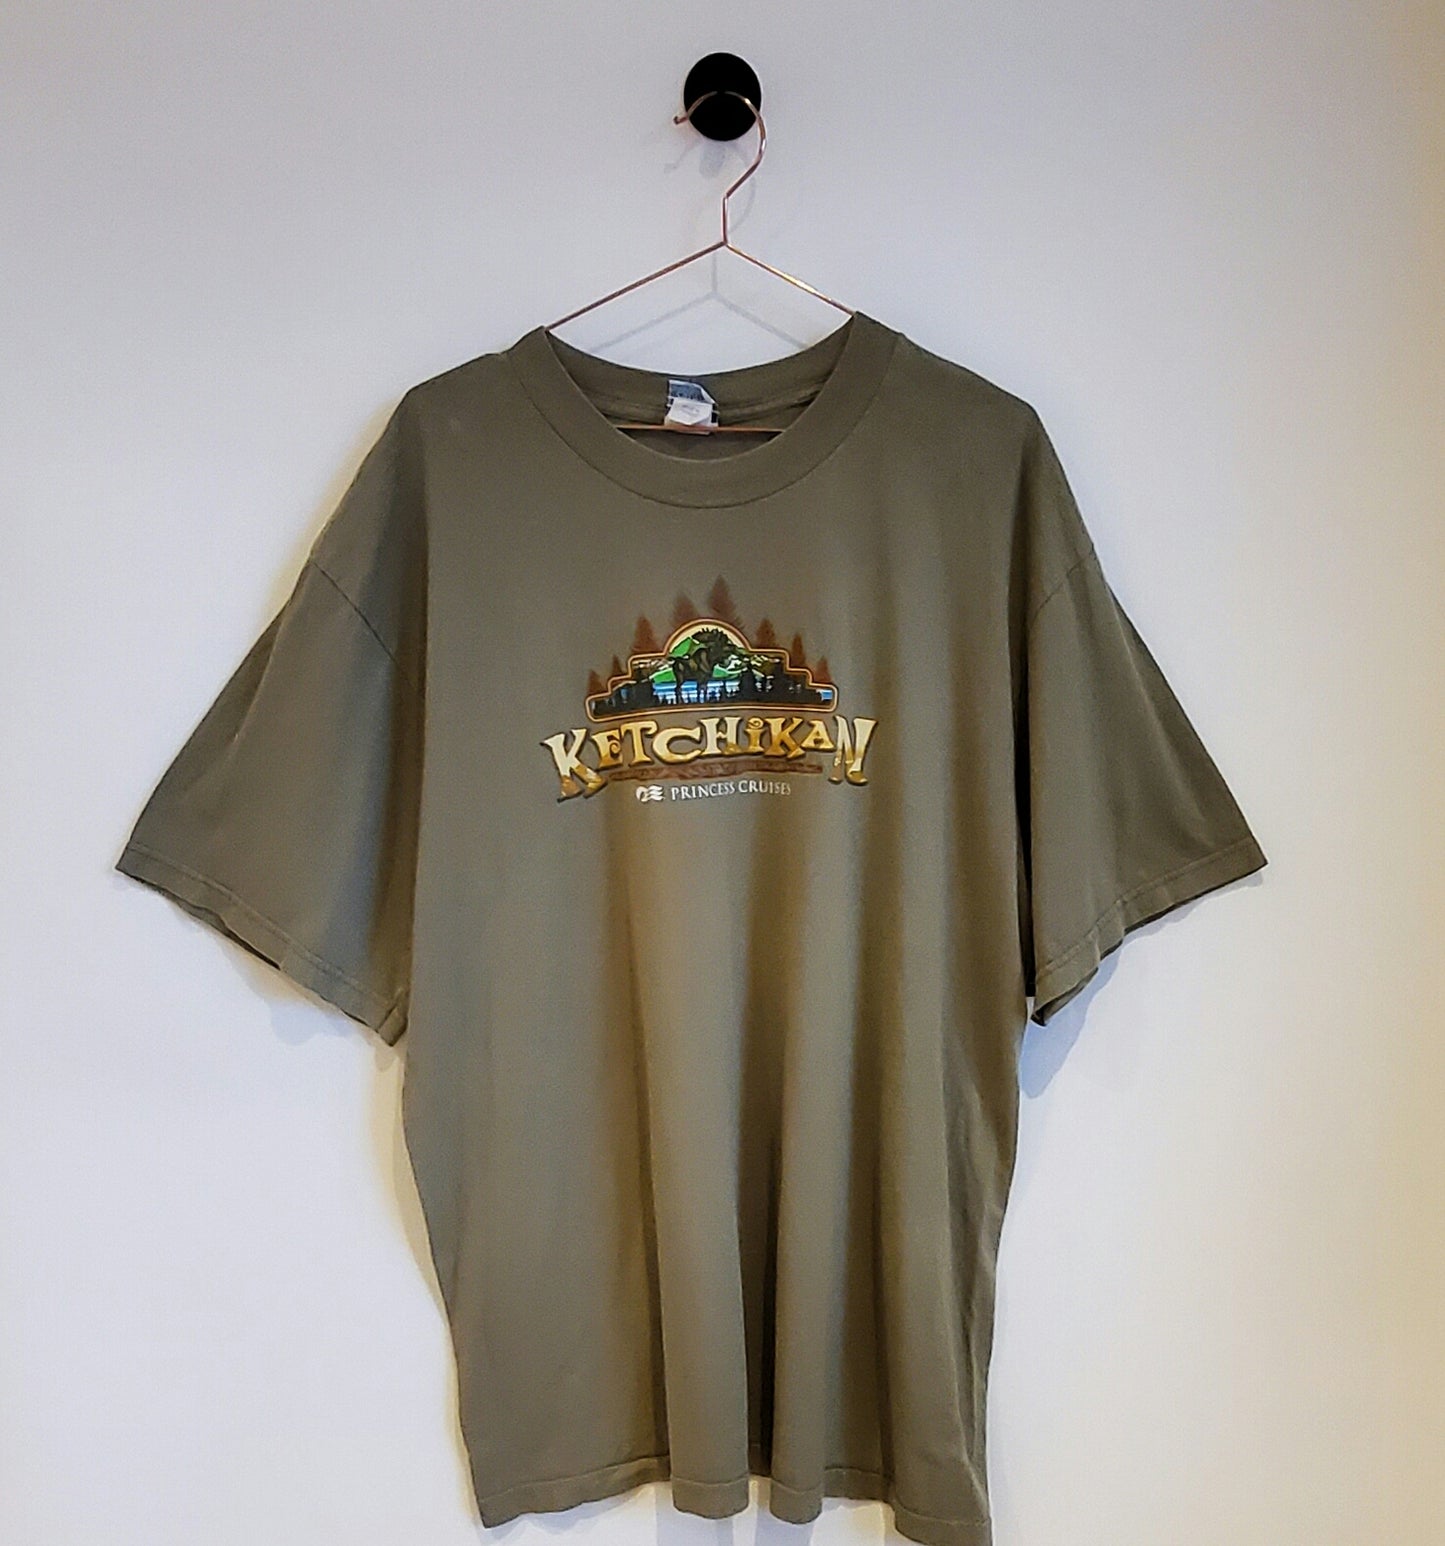 Ketchikan Graphic T-shirt | Size XXL